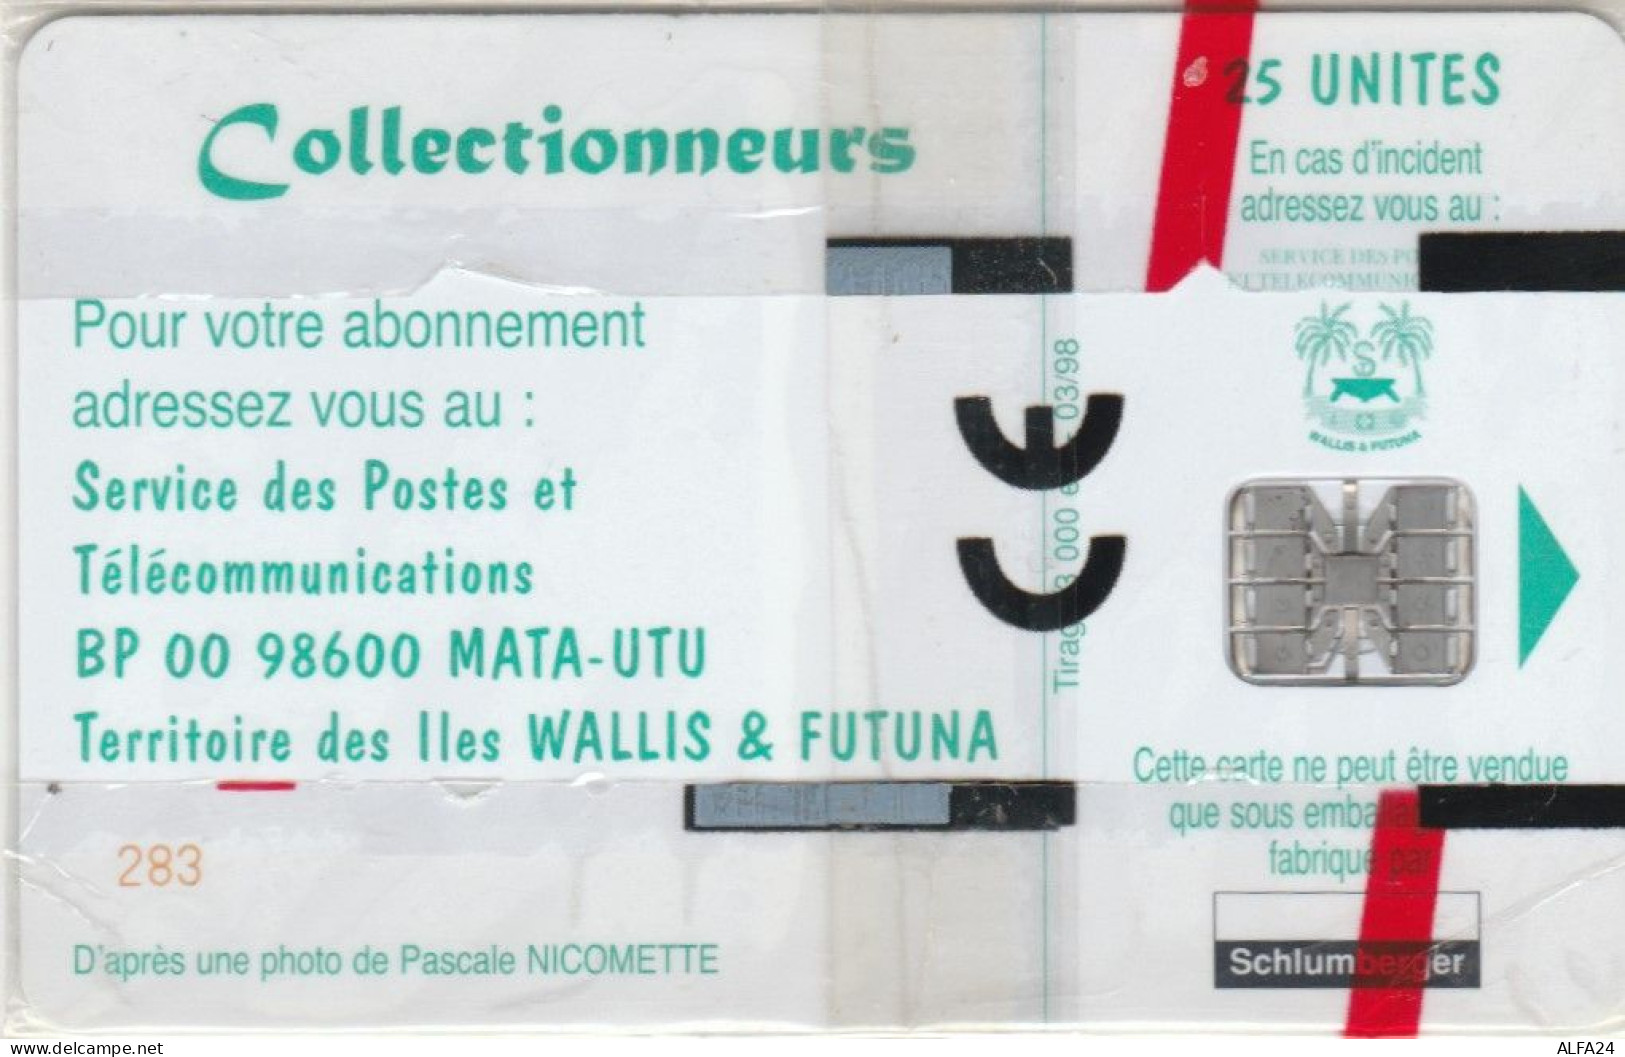 PHONE CARD WALLIS E FUTUNA -NEW BLISTER (E103.39.6 - Wallis And Futuna